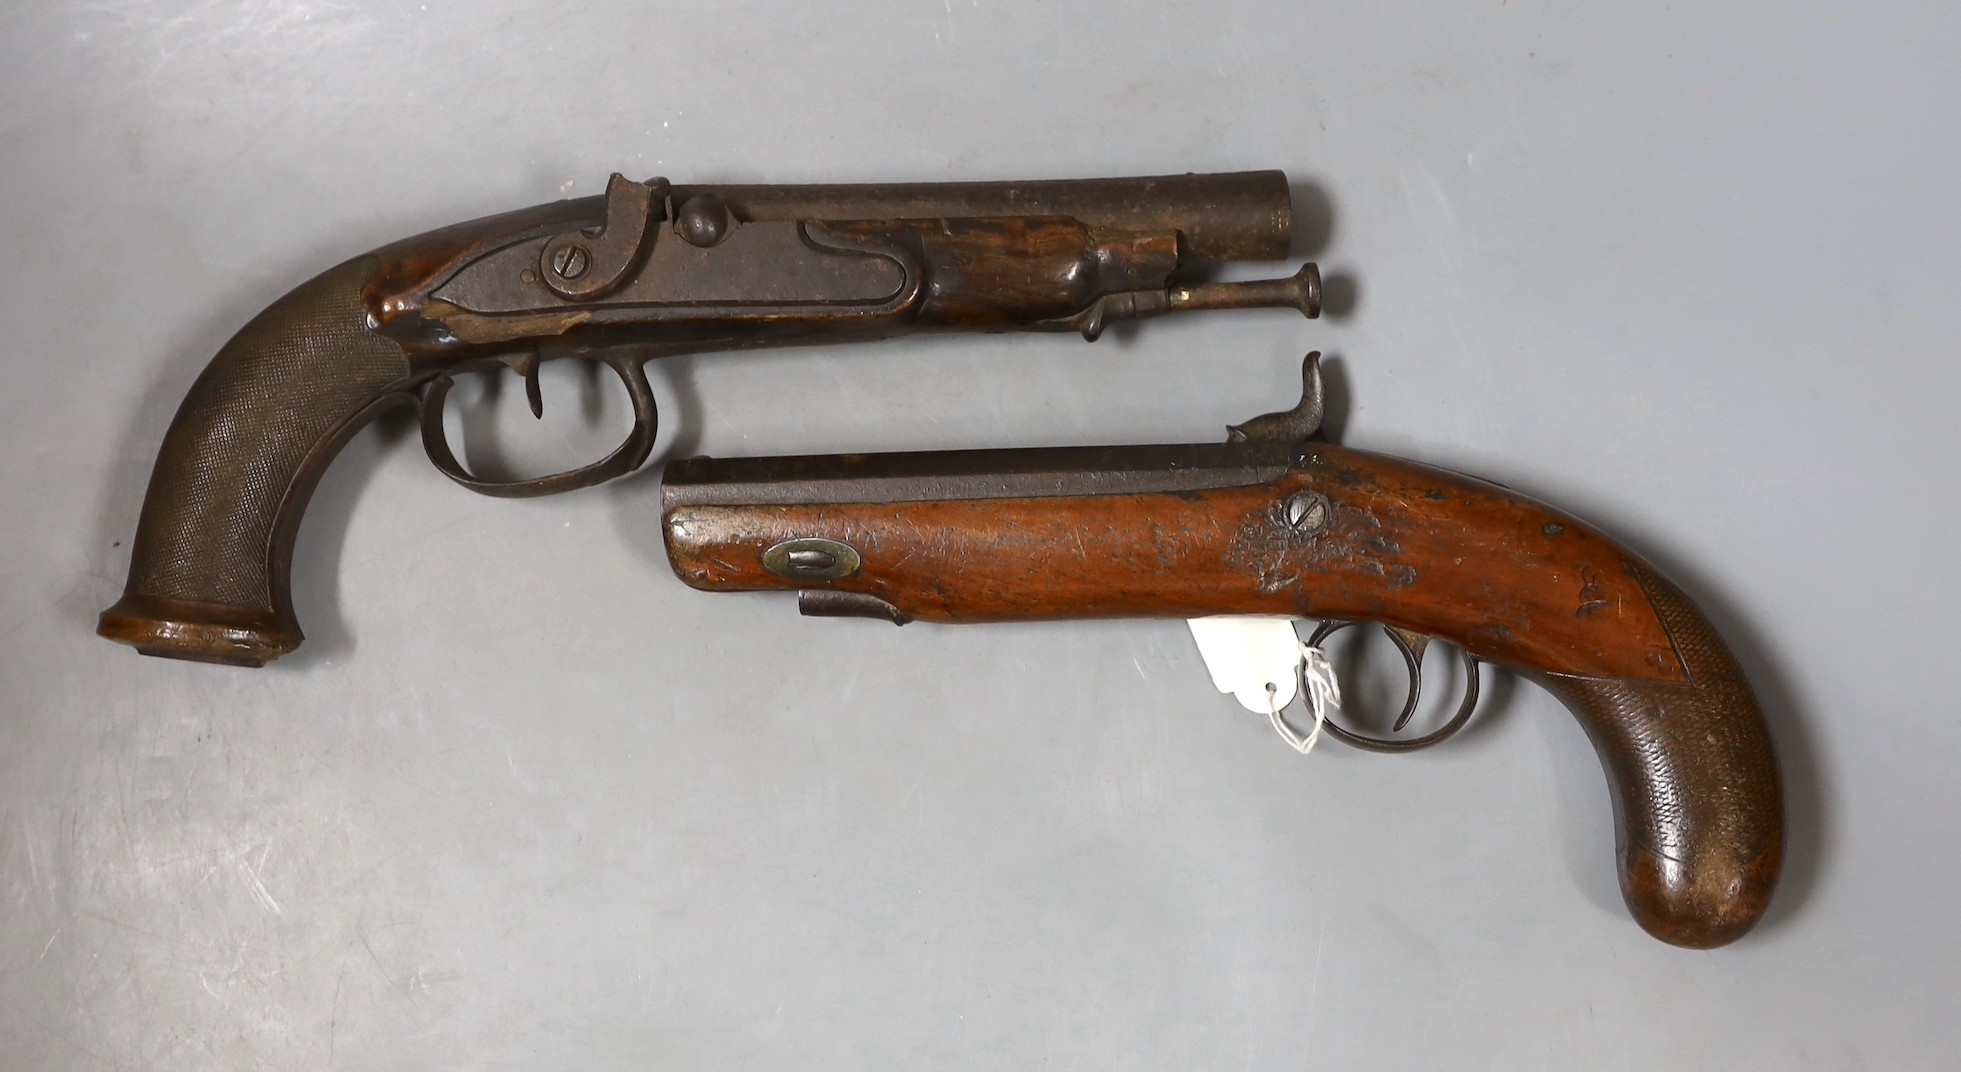 Two various percussion cap pistols